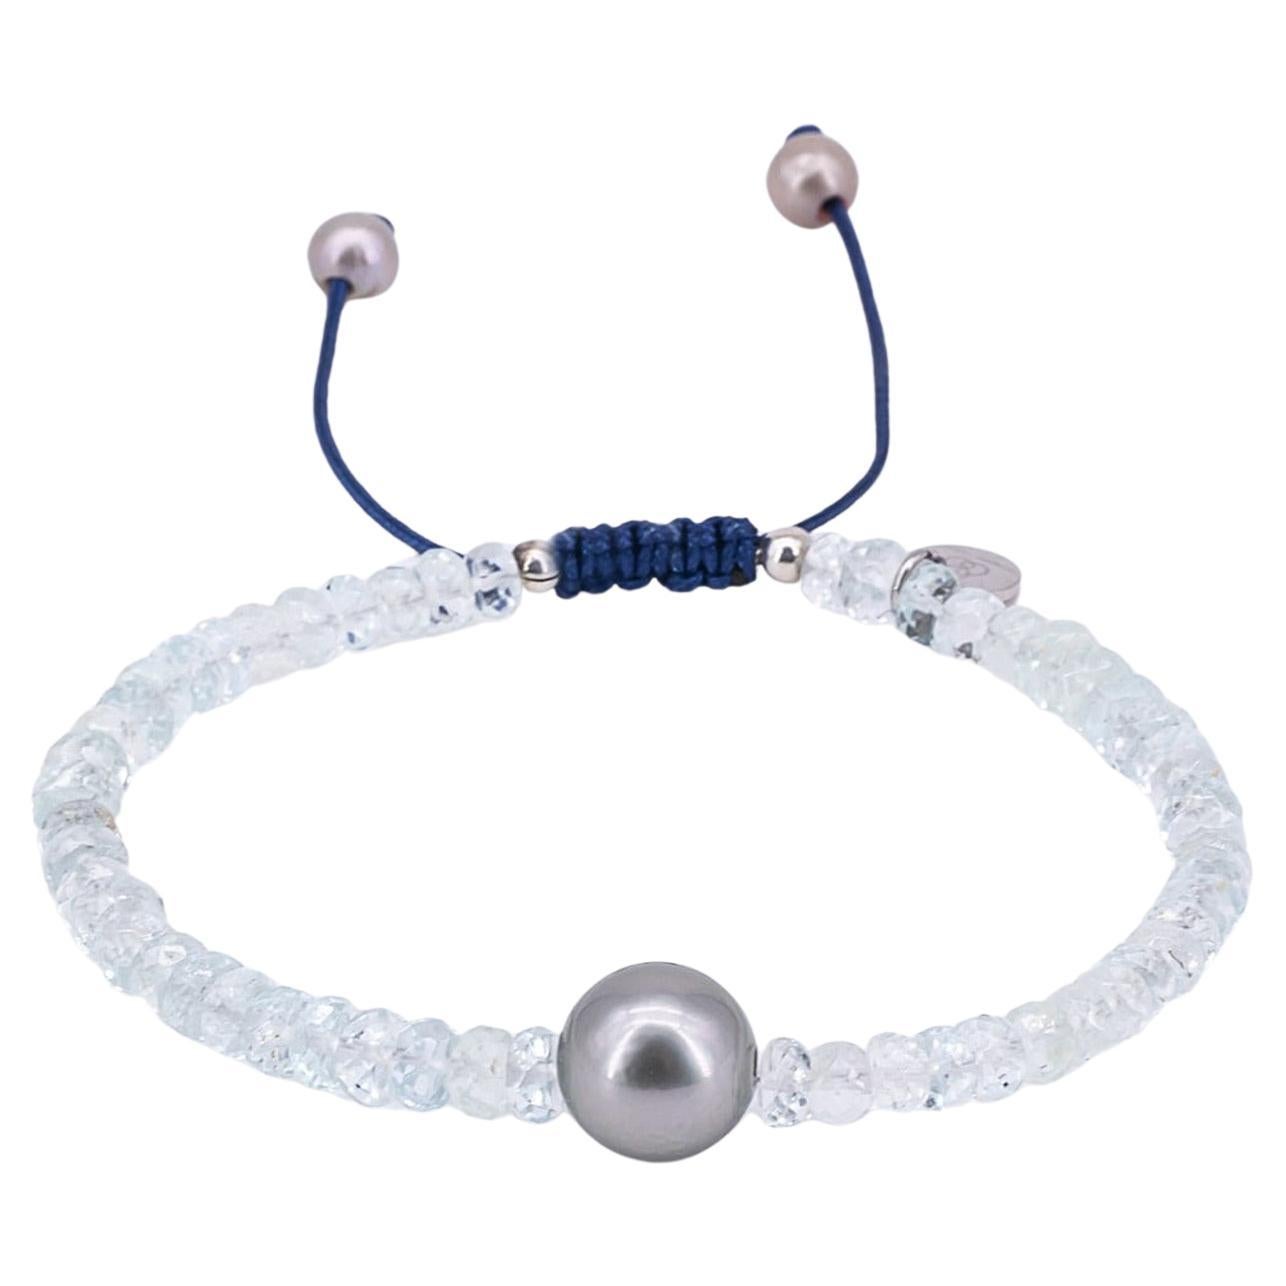 Aquamarine Bracelet with Tahiti pearl and drawstring closure